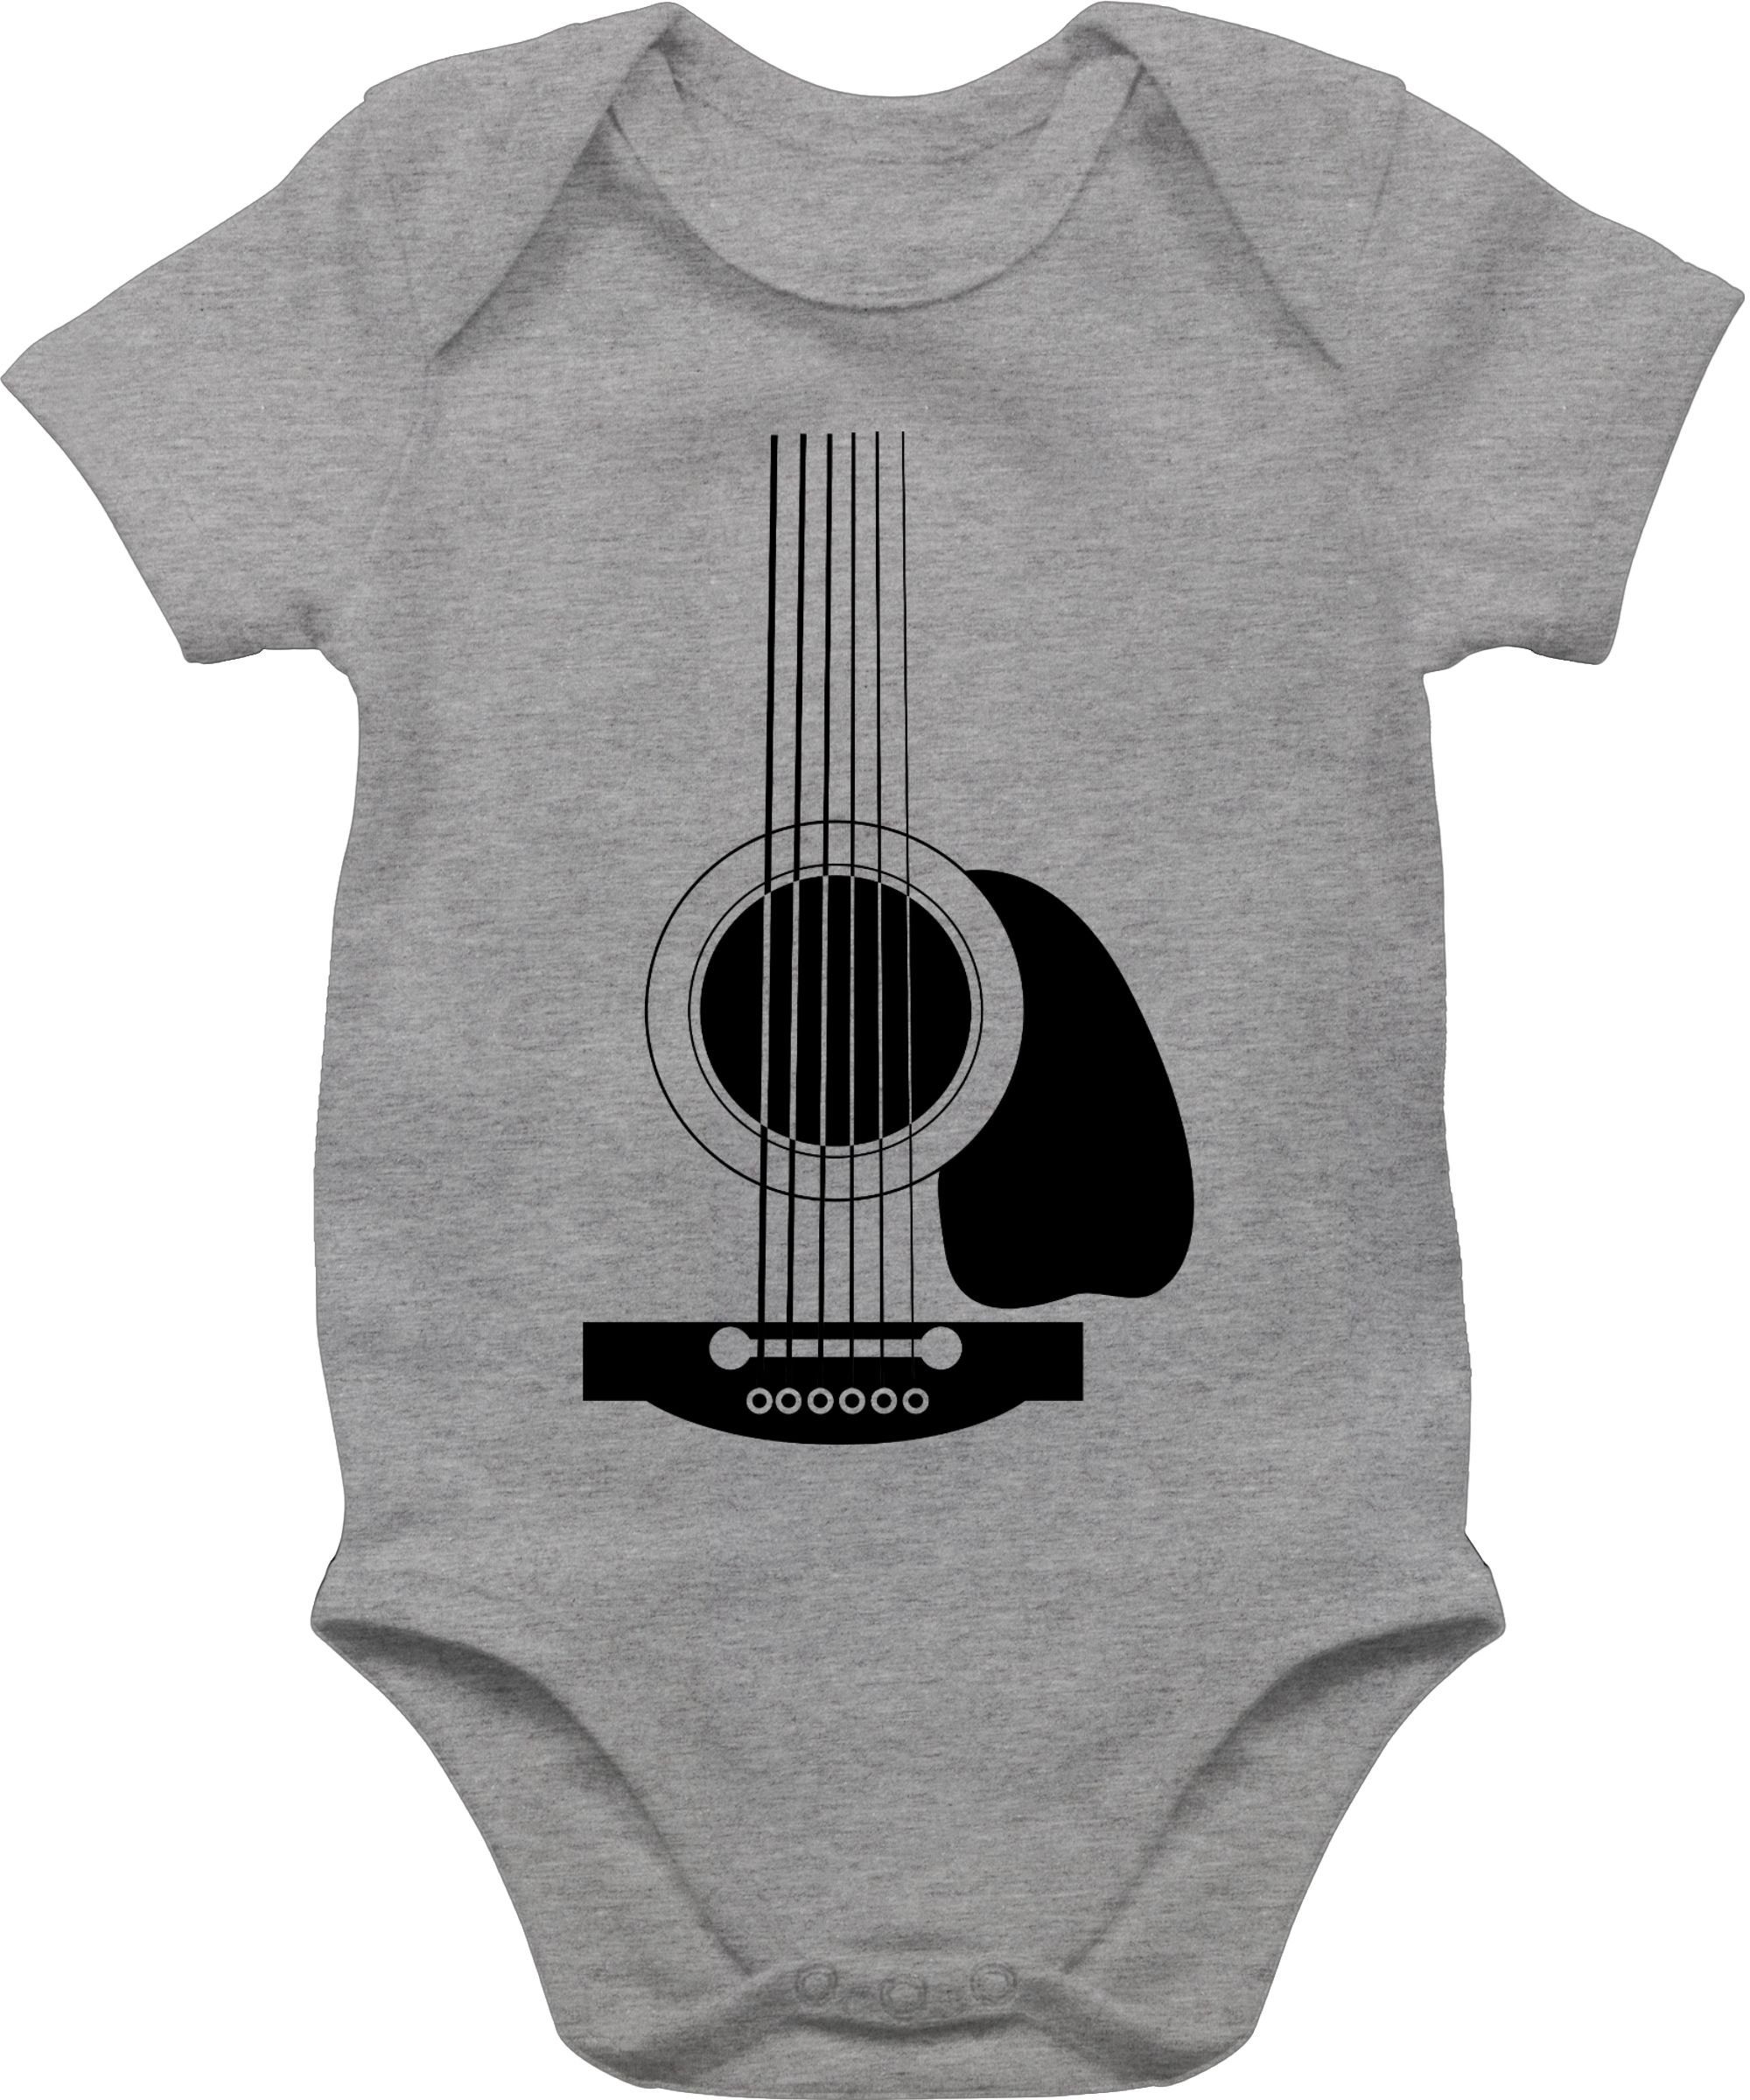 Shirtracer Shirtbody Gitarren Body Strampler Baby Mädchen & Junge 1 Grau meliert